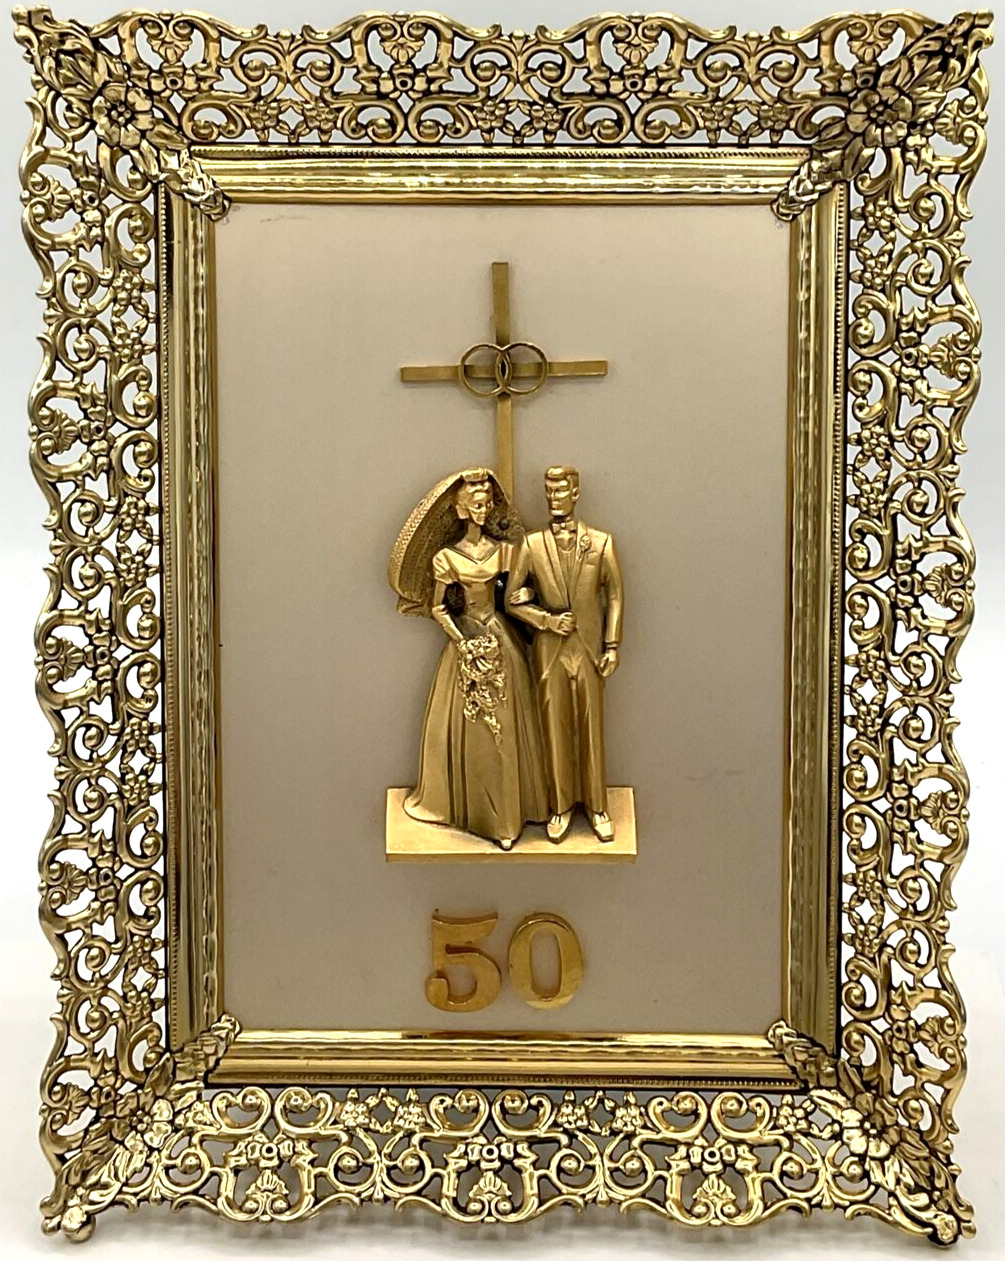 Creed Framed 50th Wedding Anniversary 3-D Gold Tone Metal Christian Cross